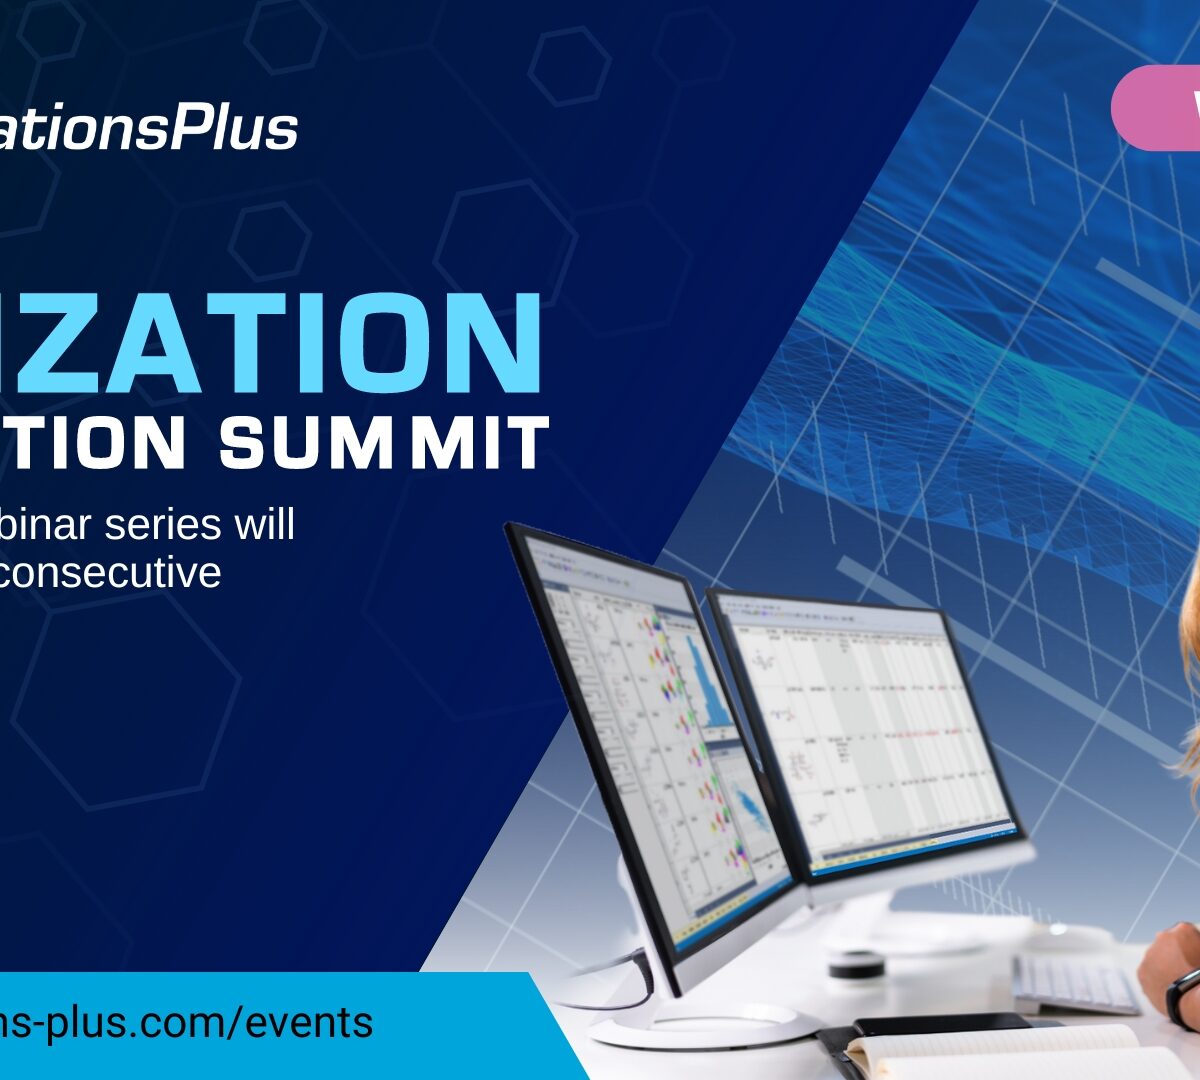 Ionization Prediction Summit Webinar Series: Session 1 Fundamentals of Ionization